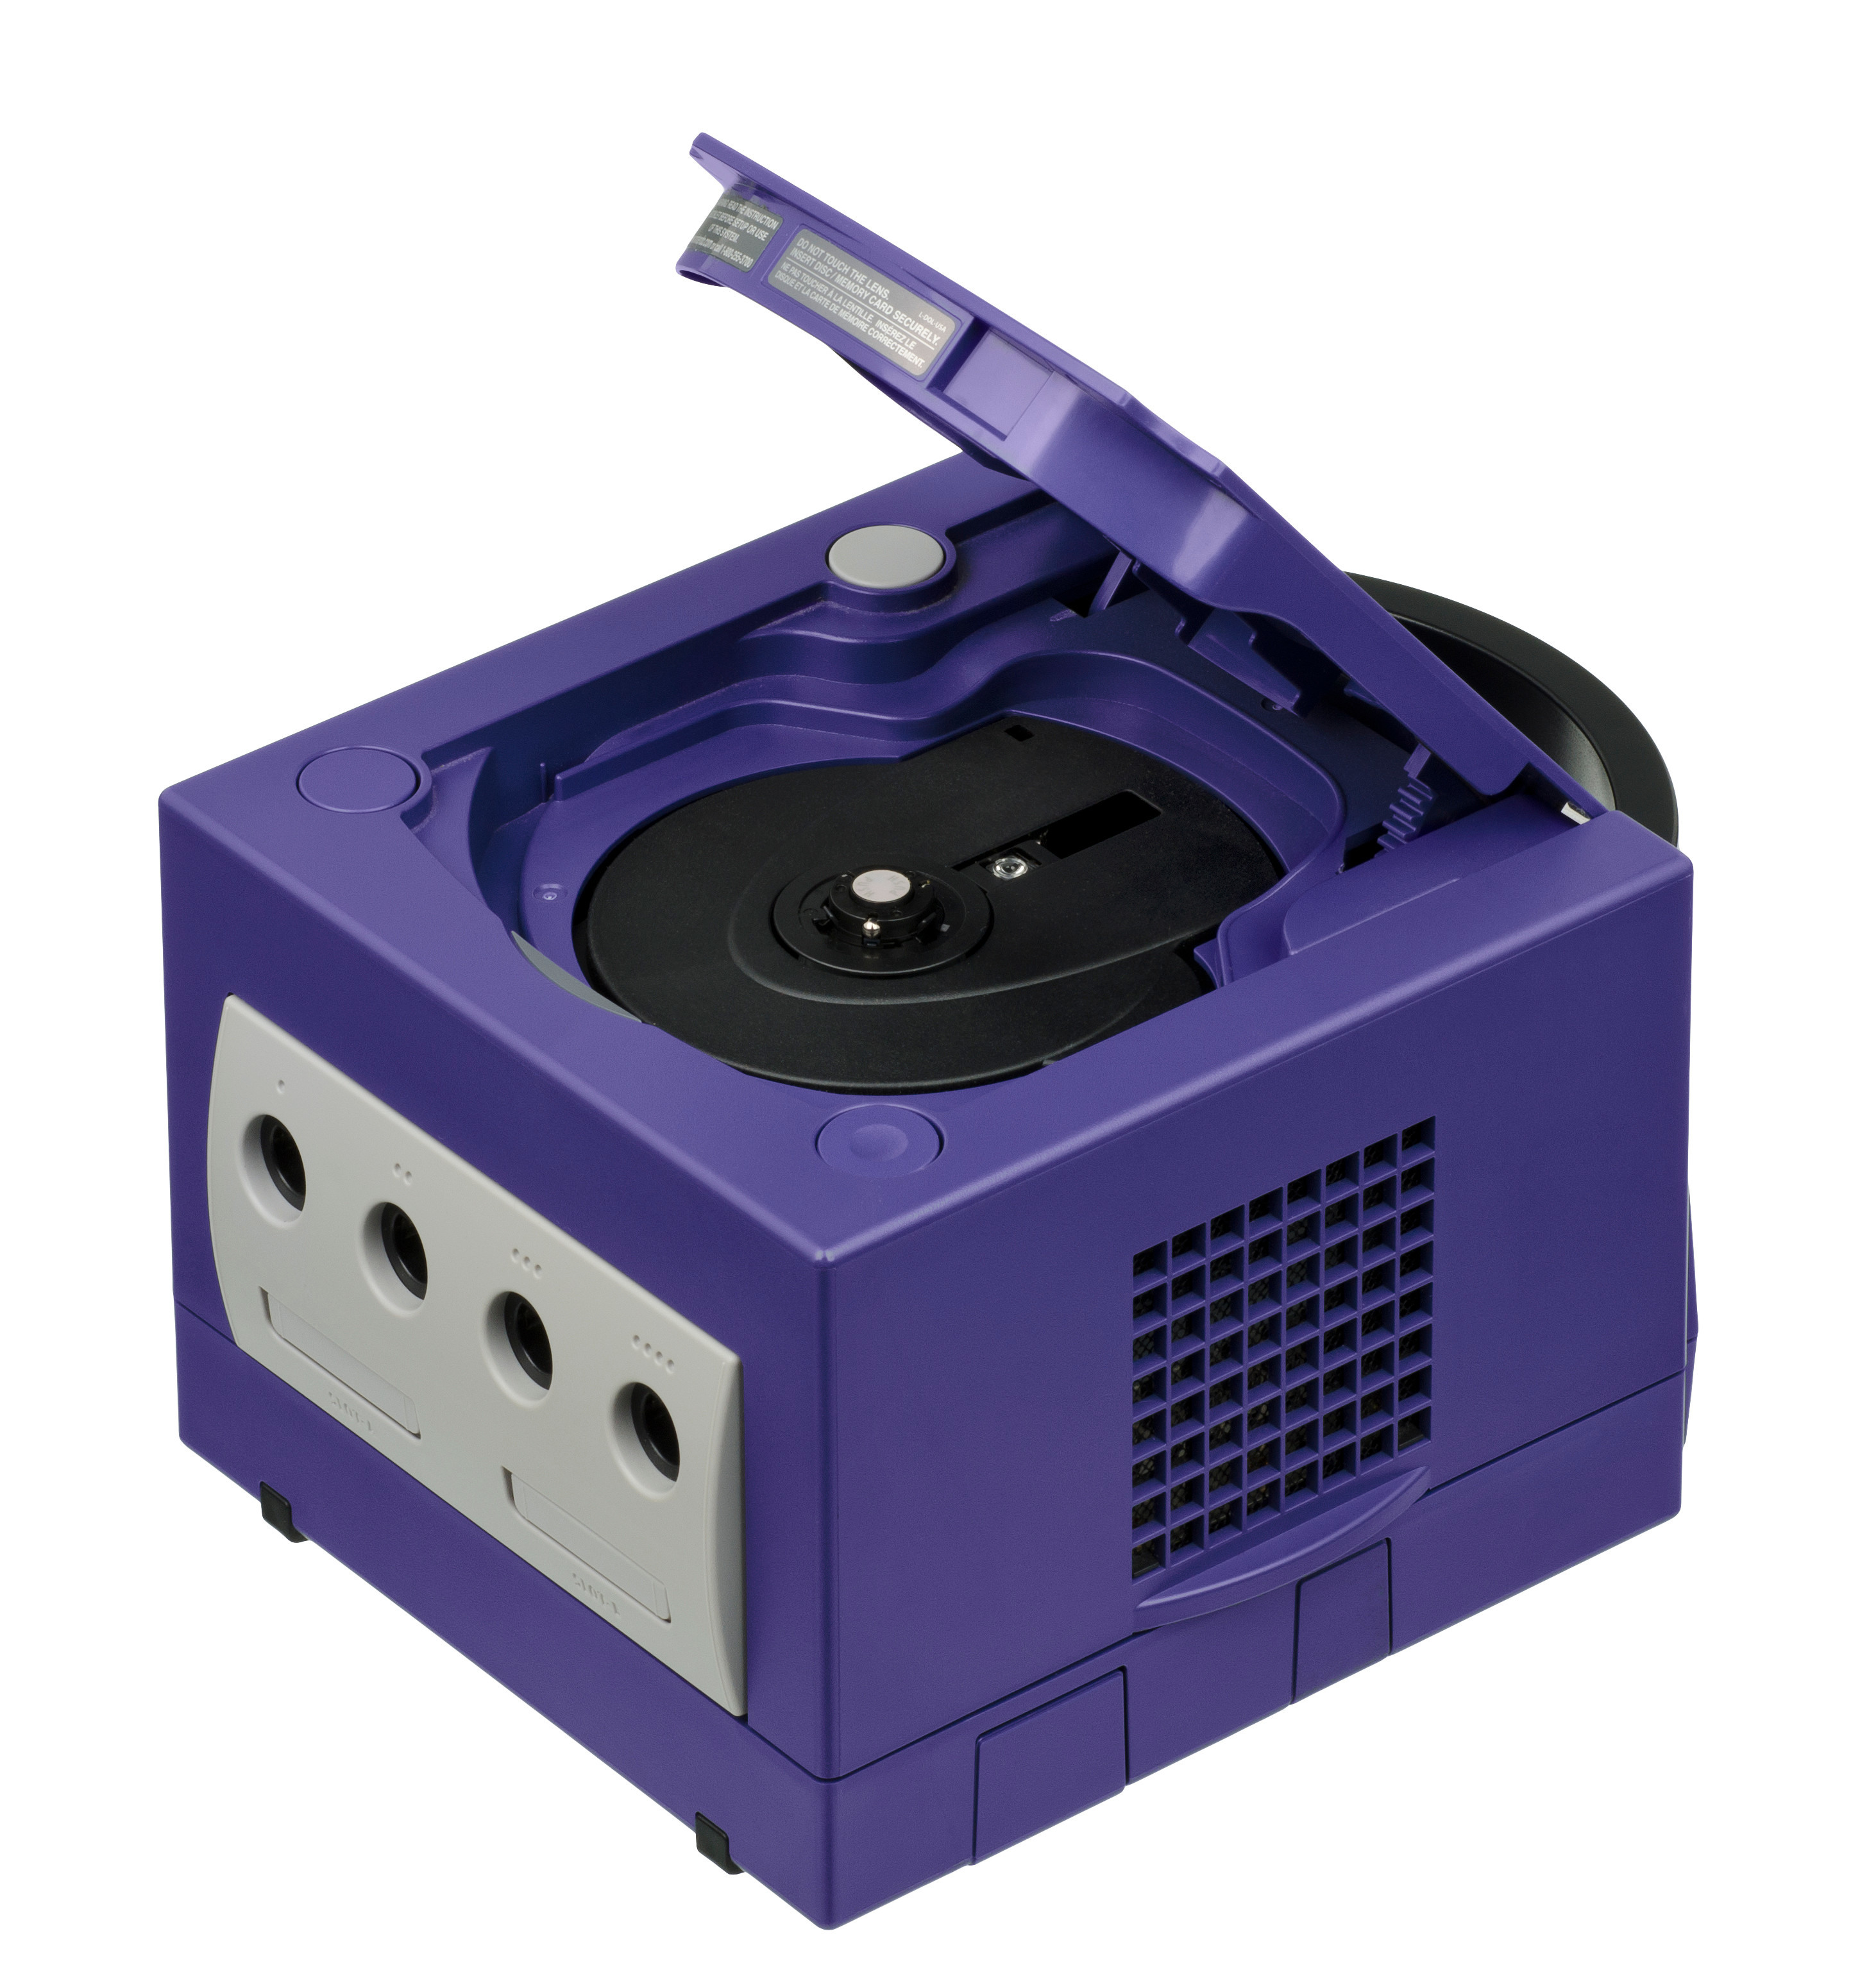 Nintendo GameCube 主機迎接誕生20 周年紀念承先啟後的獨特遊戲方塊